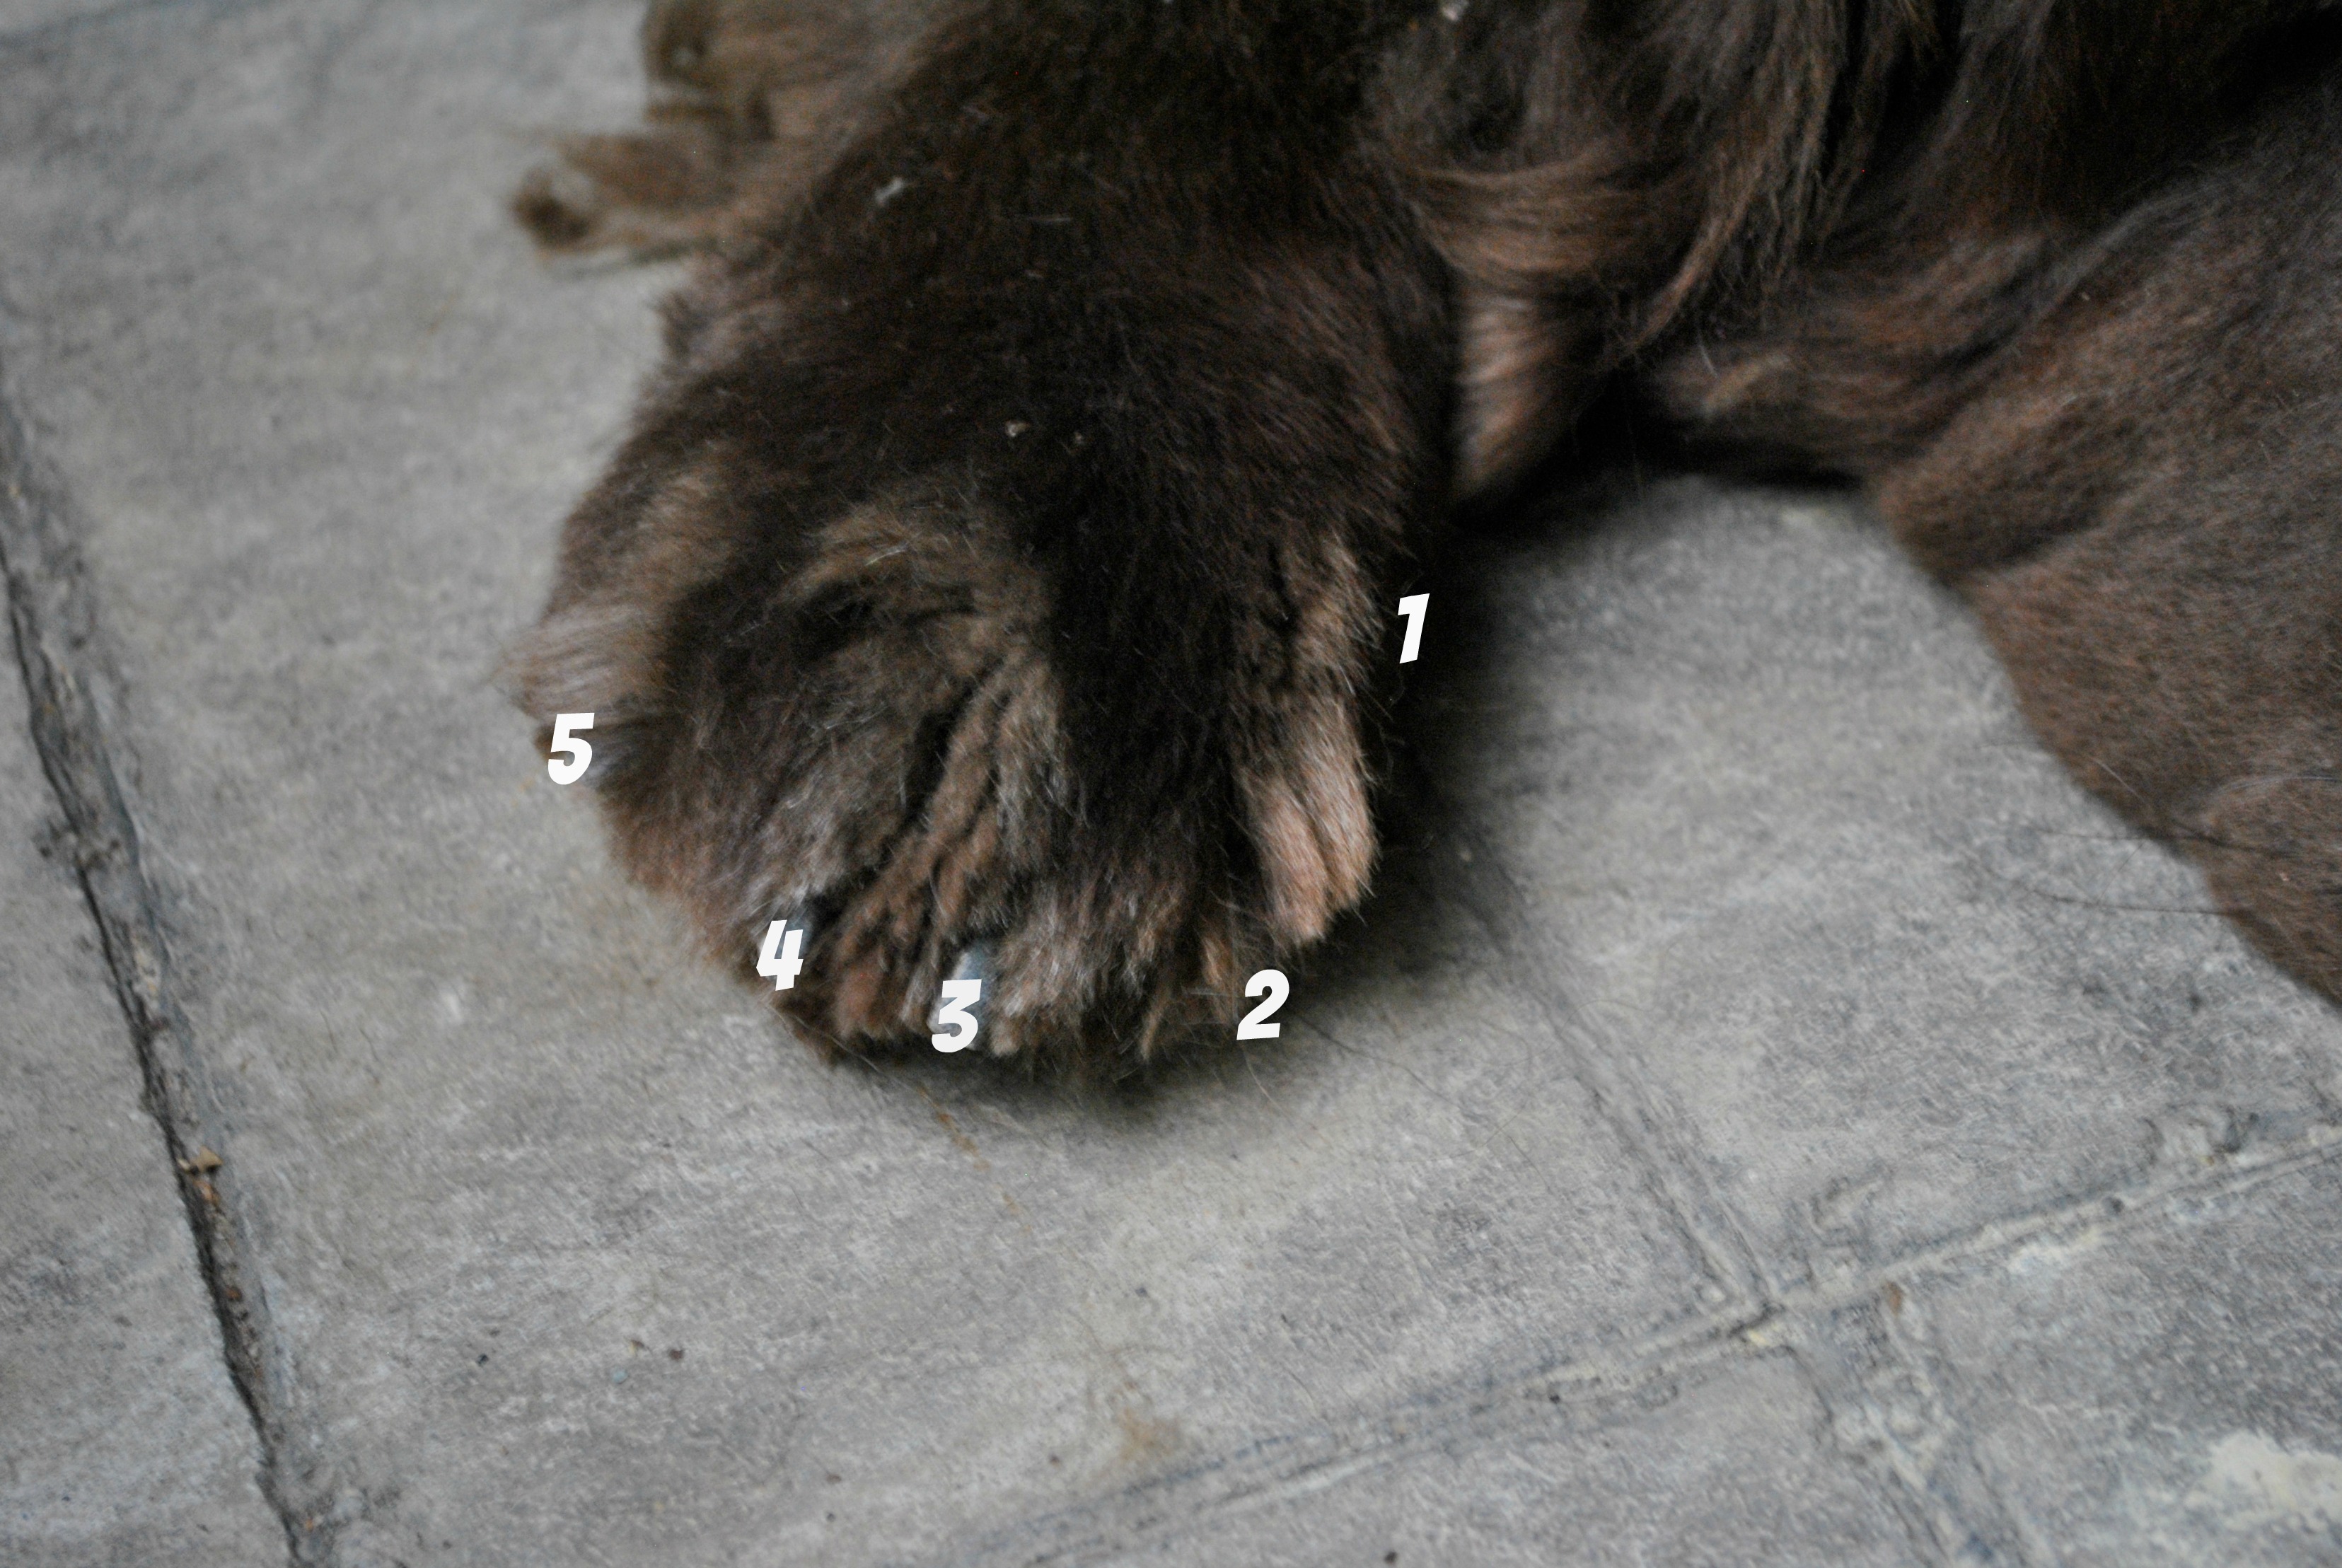 newfoundland dogs have webbed feet